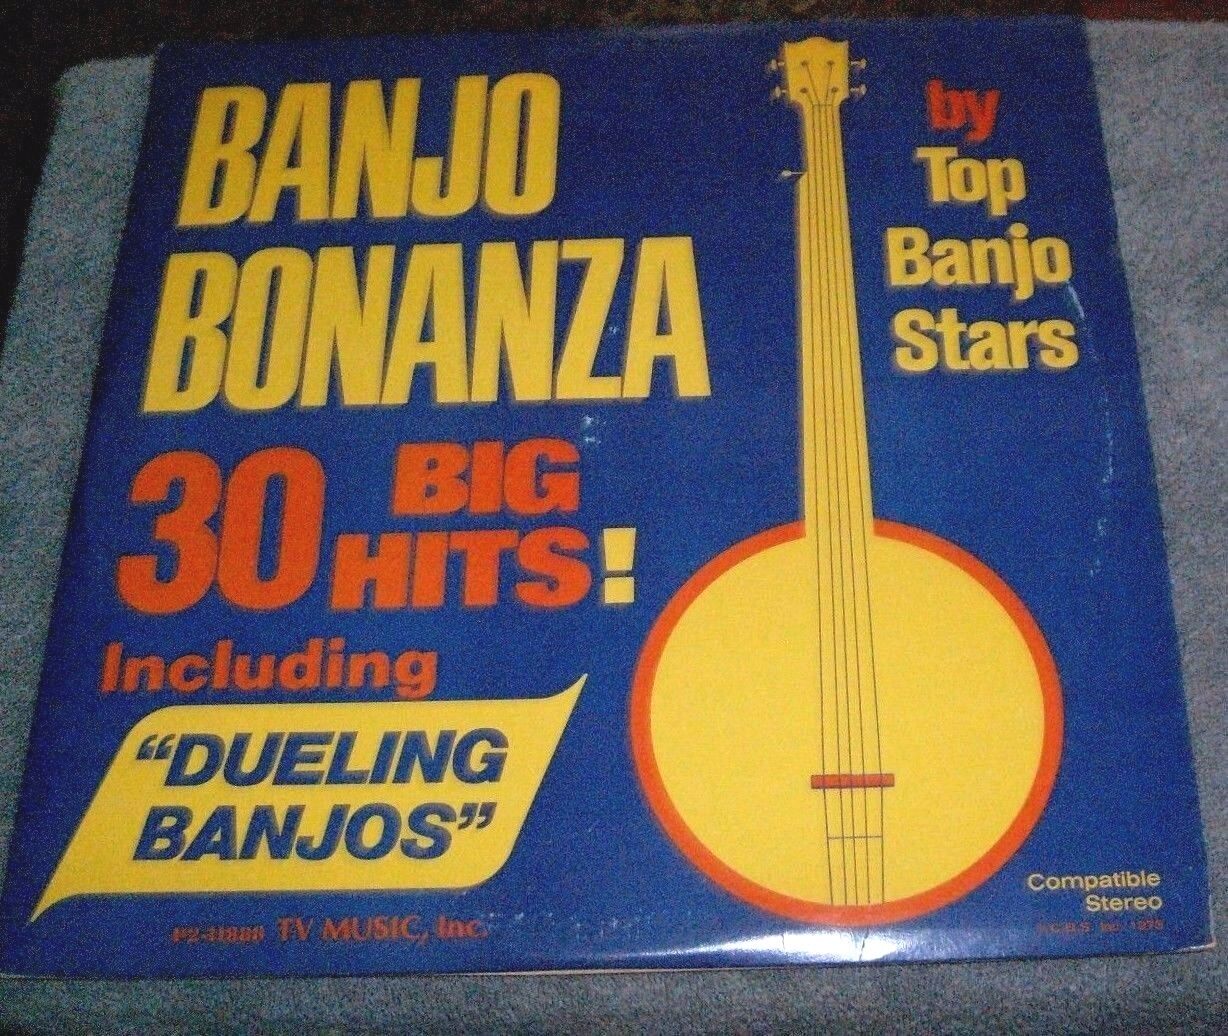 BANJO BONANZA Double LP Album by Top Banjo Stars - Vinyl, 1974 Columbia Records